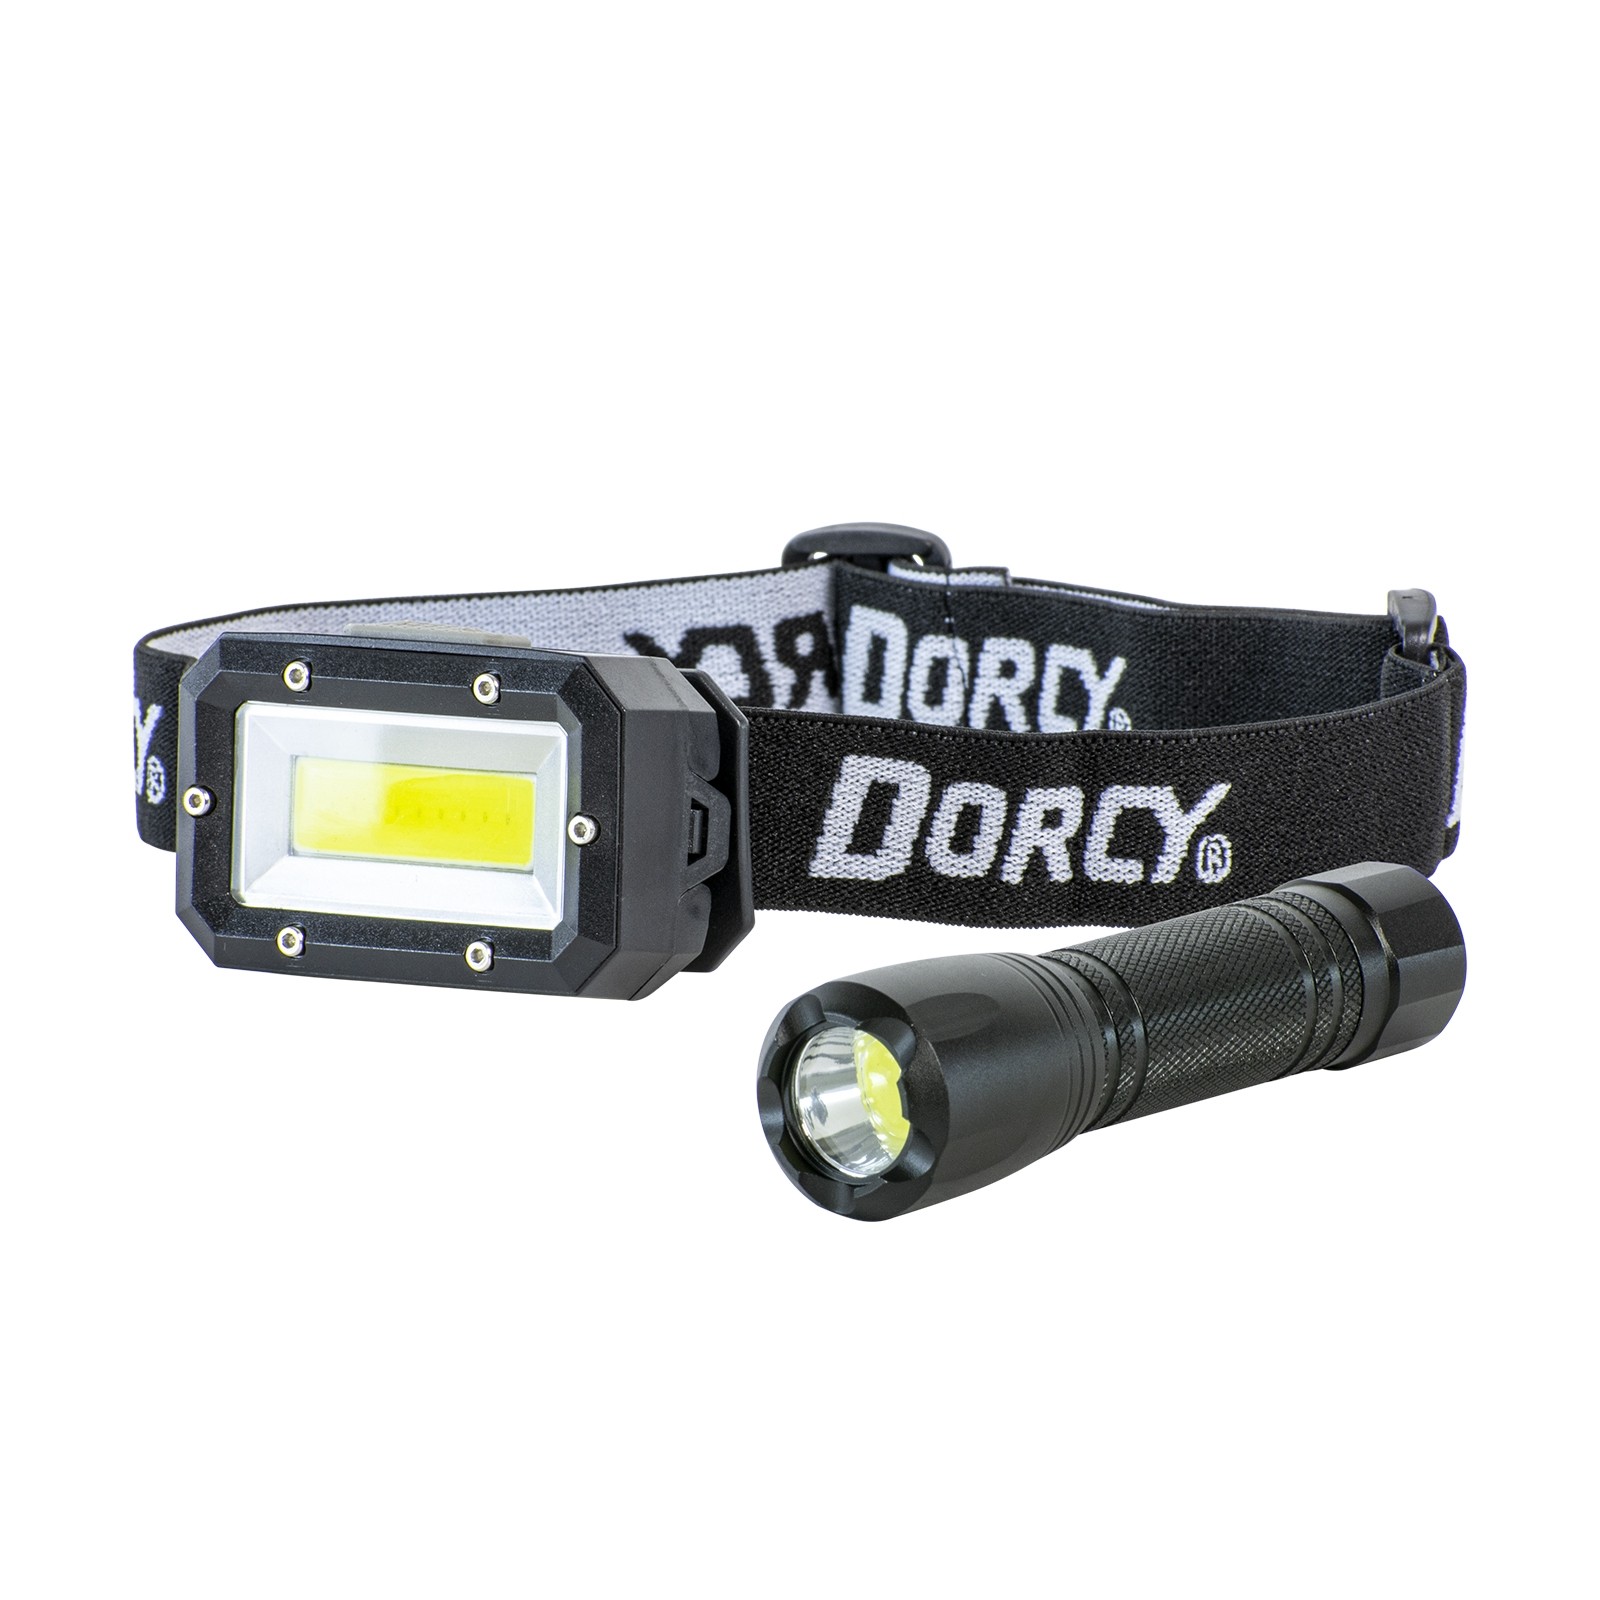 Dorcy Headlamp and Flashlight Combo